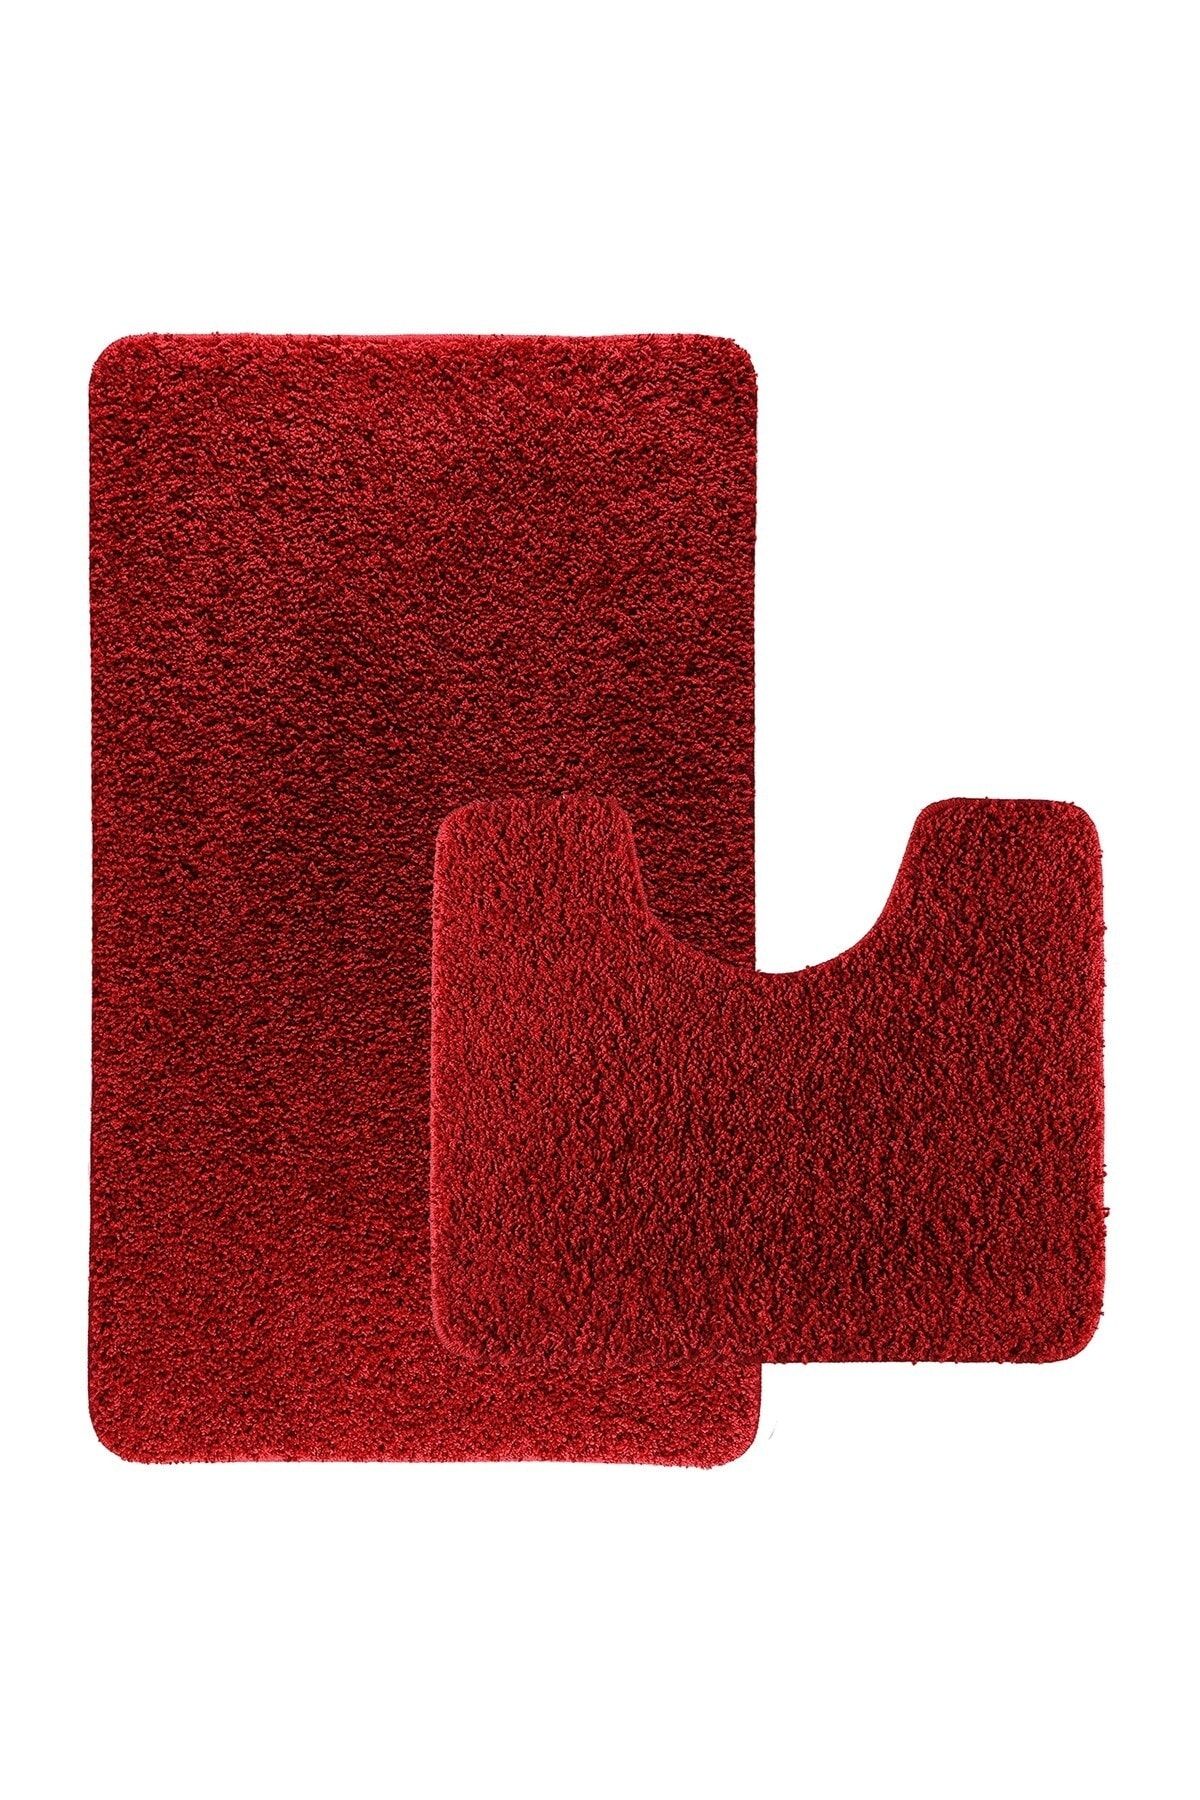 EUROBANO Kırmızı Shaggy Kıvırcık Halı Kaymaz Tabanlı 2'li Set Banyo Halısı Paspas Seti 60x100